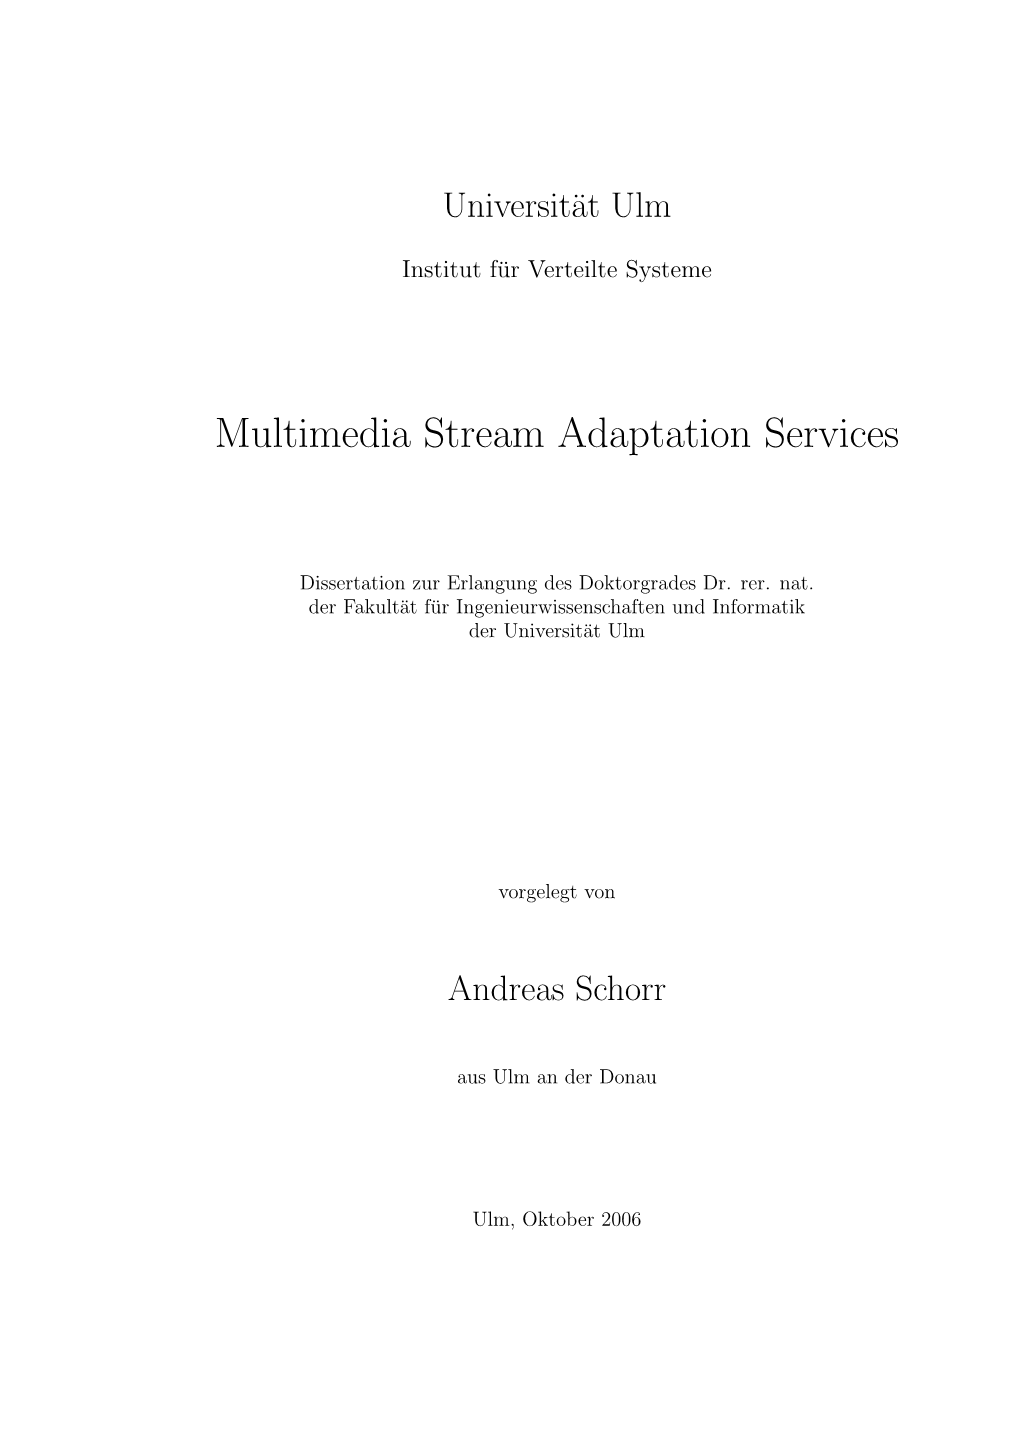 Multimedia Stream Adaptation Services